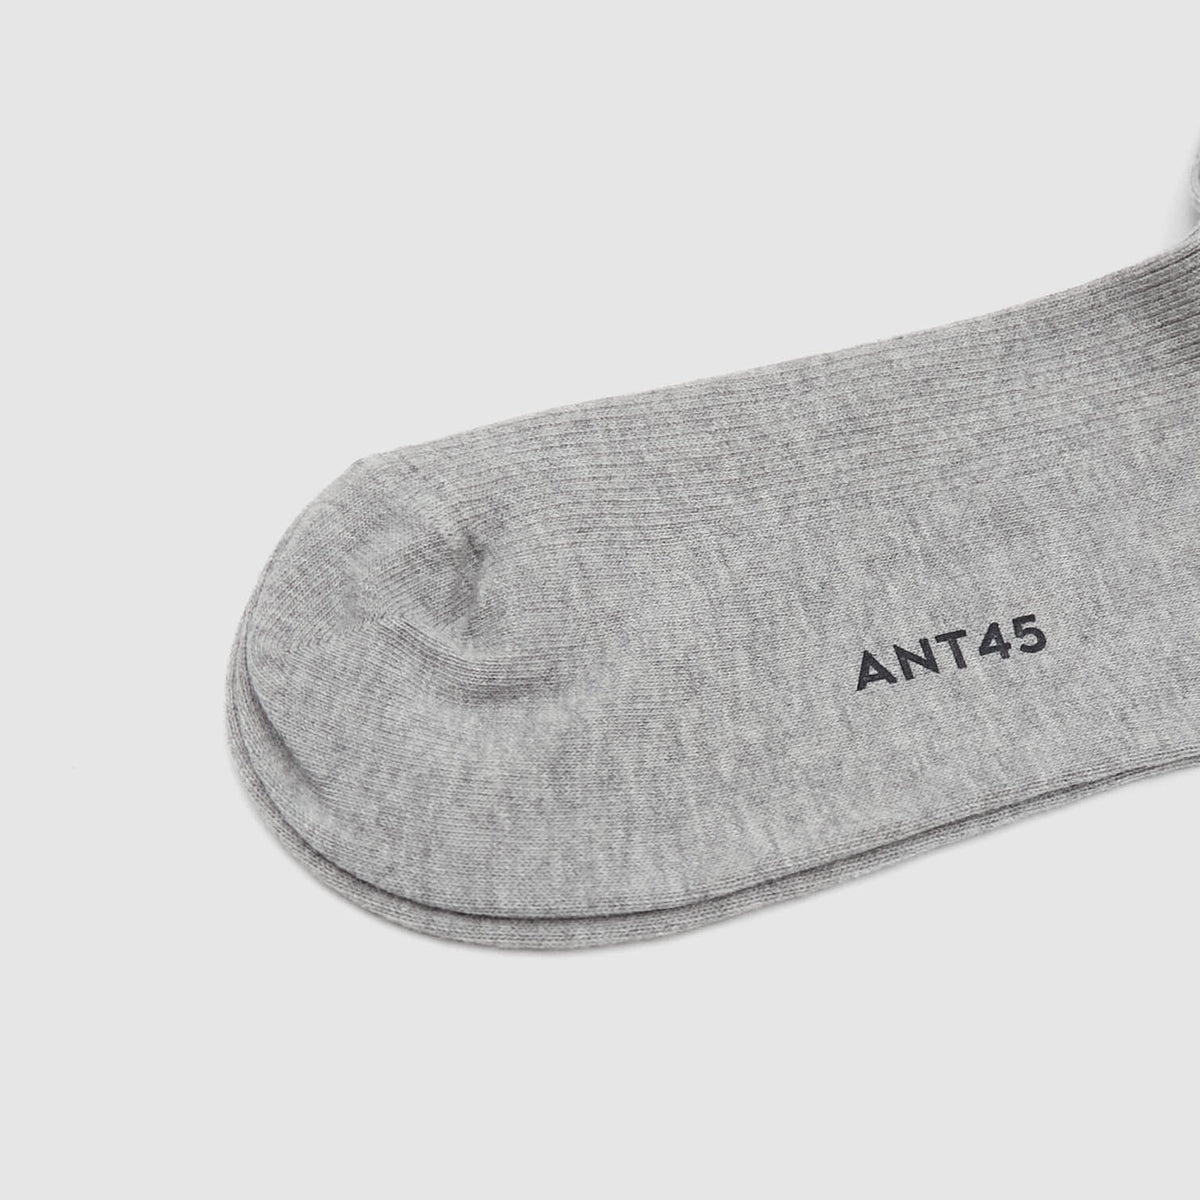 Ant 45 Classic Lightweight Cotton Socks